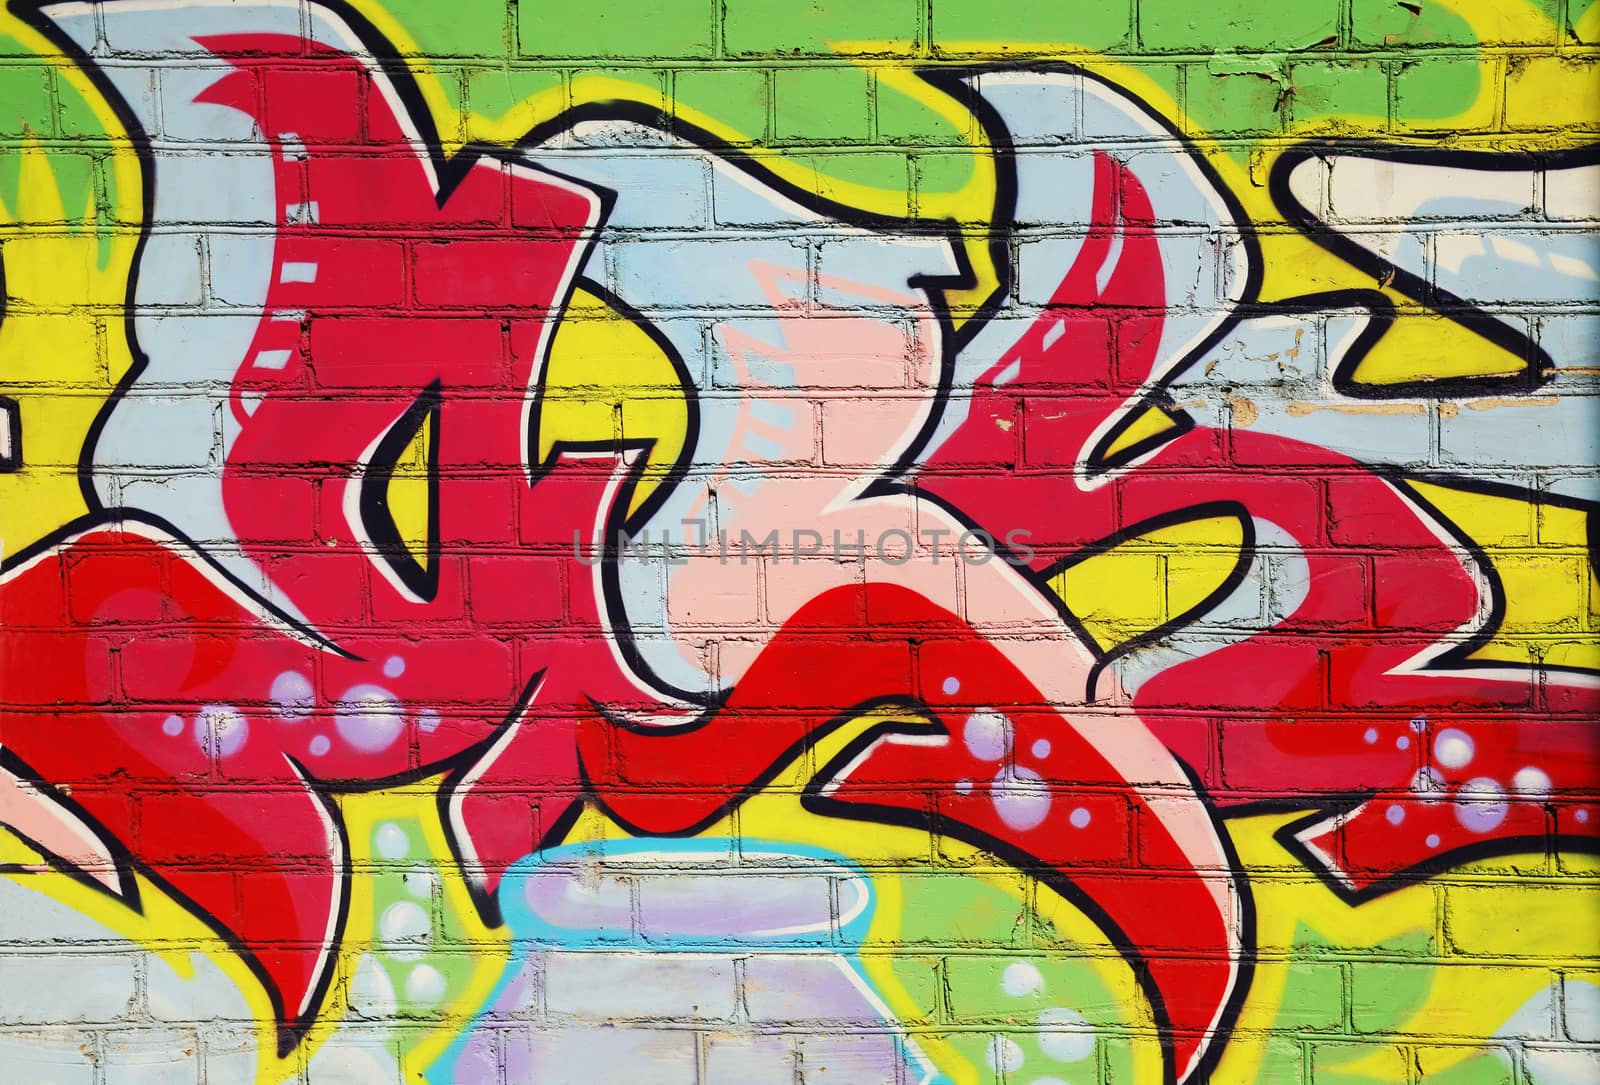 graffiti colour drawing on brick wall